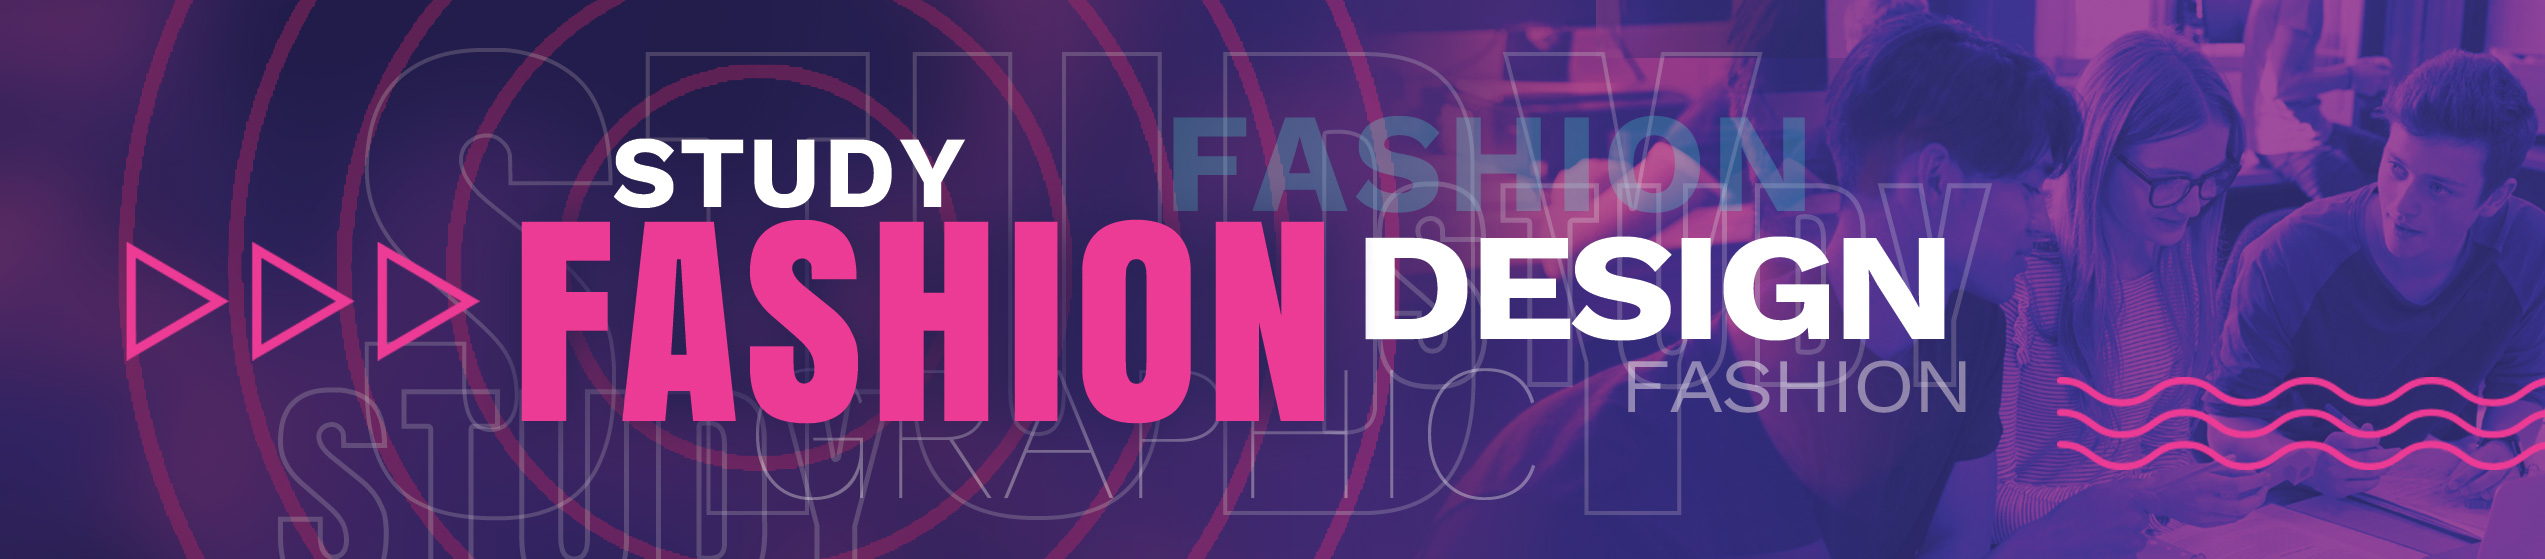 Study Fashion Design in Palmerston North & Whangarei